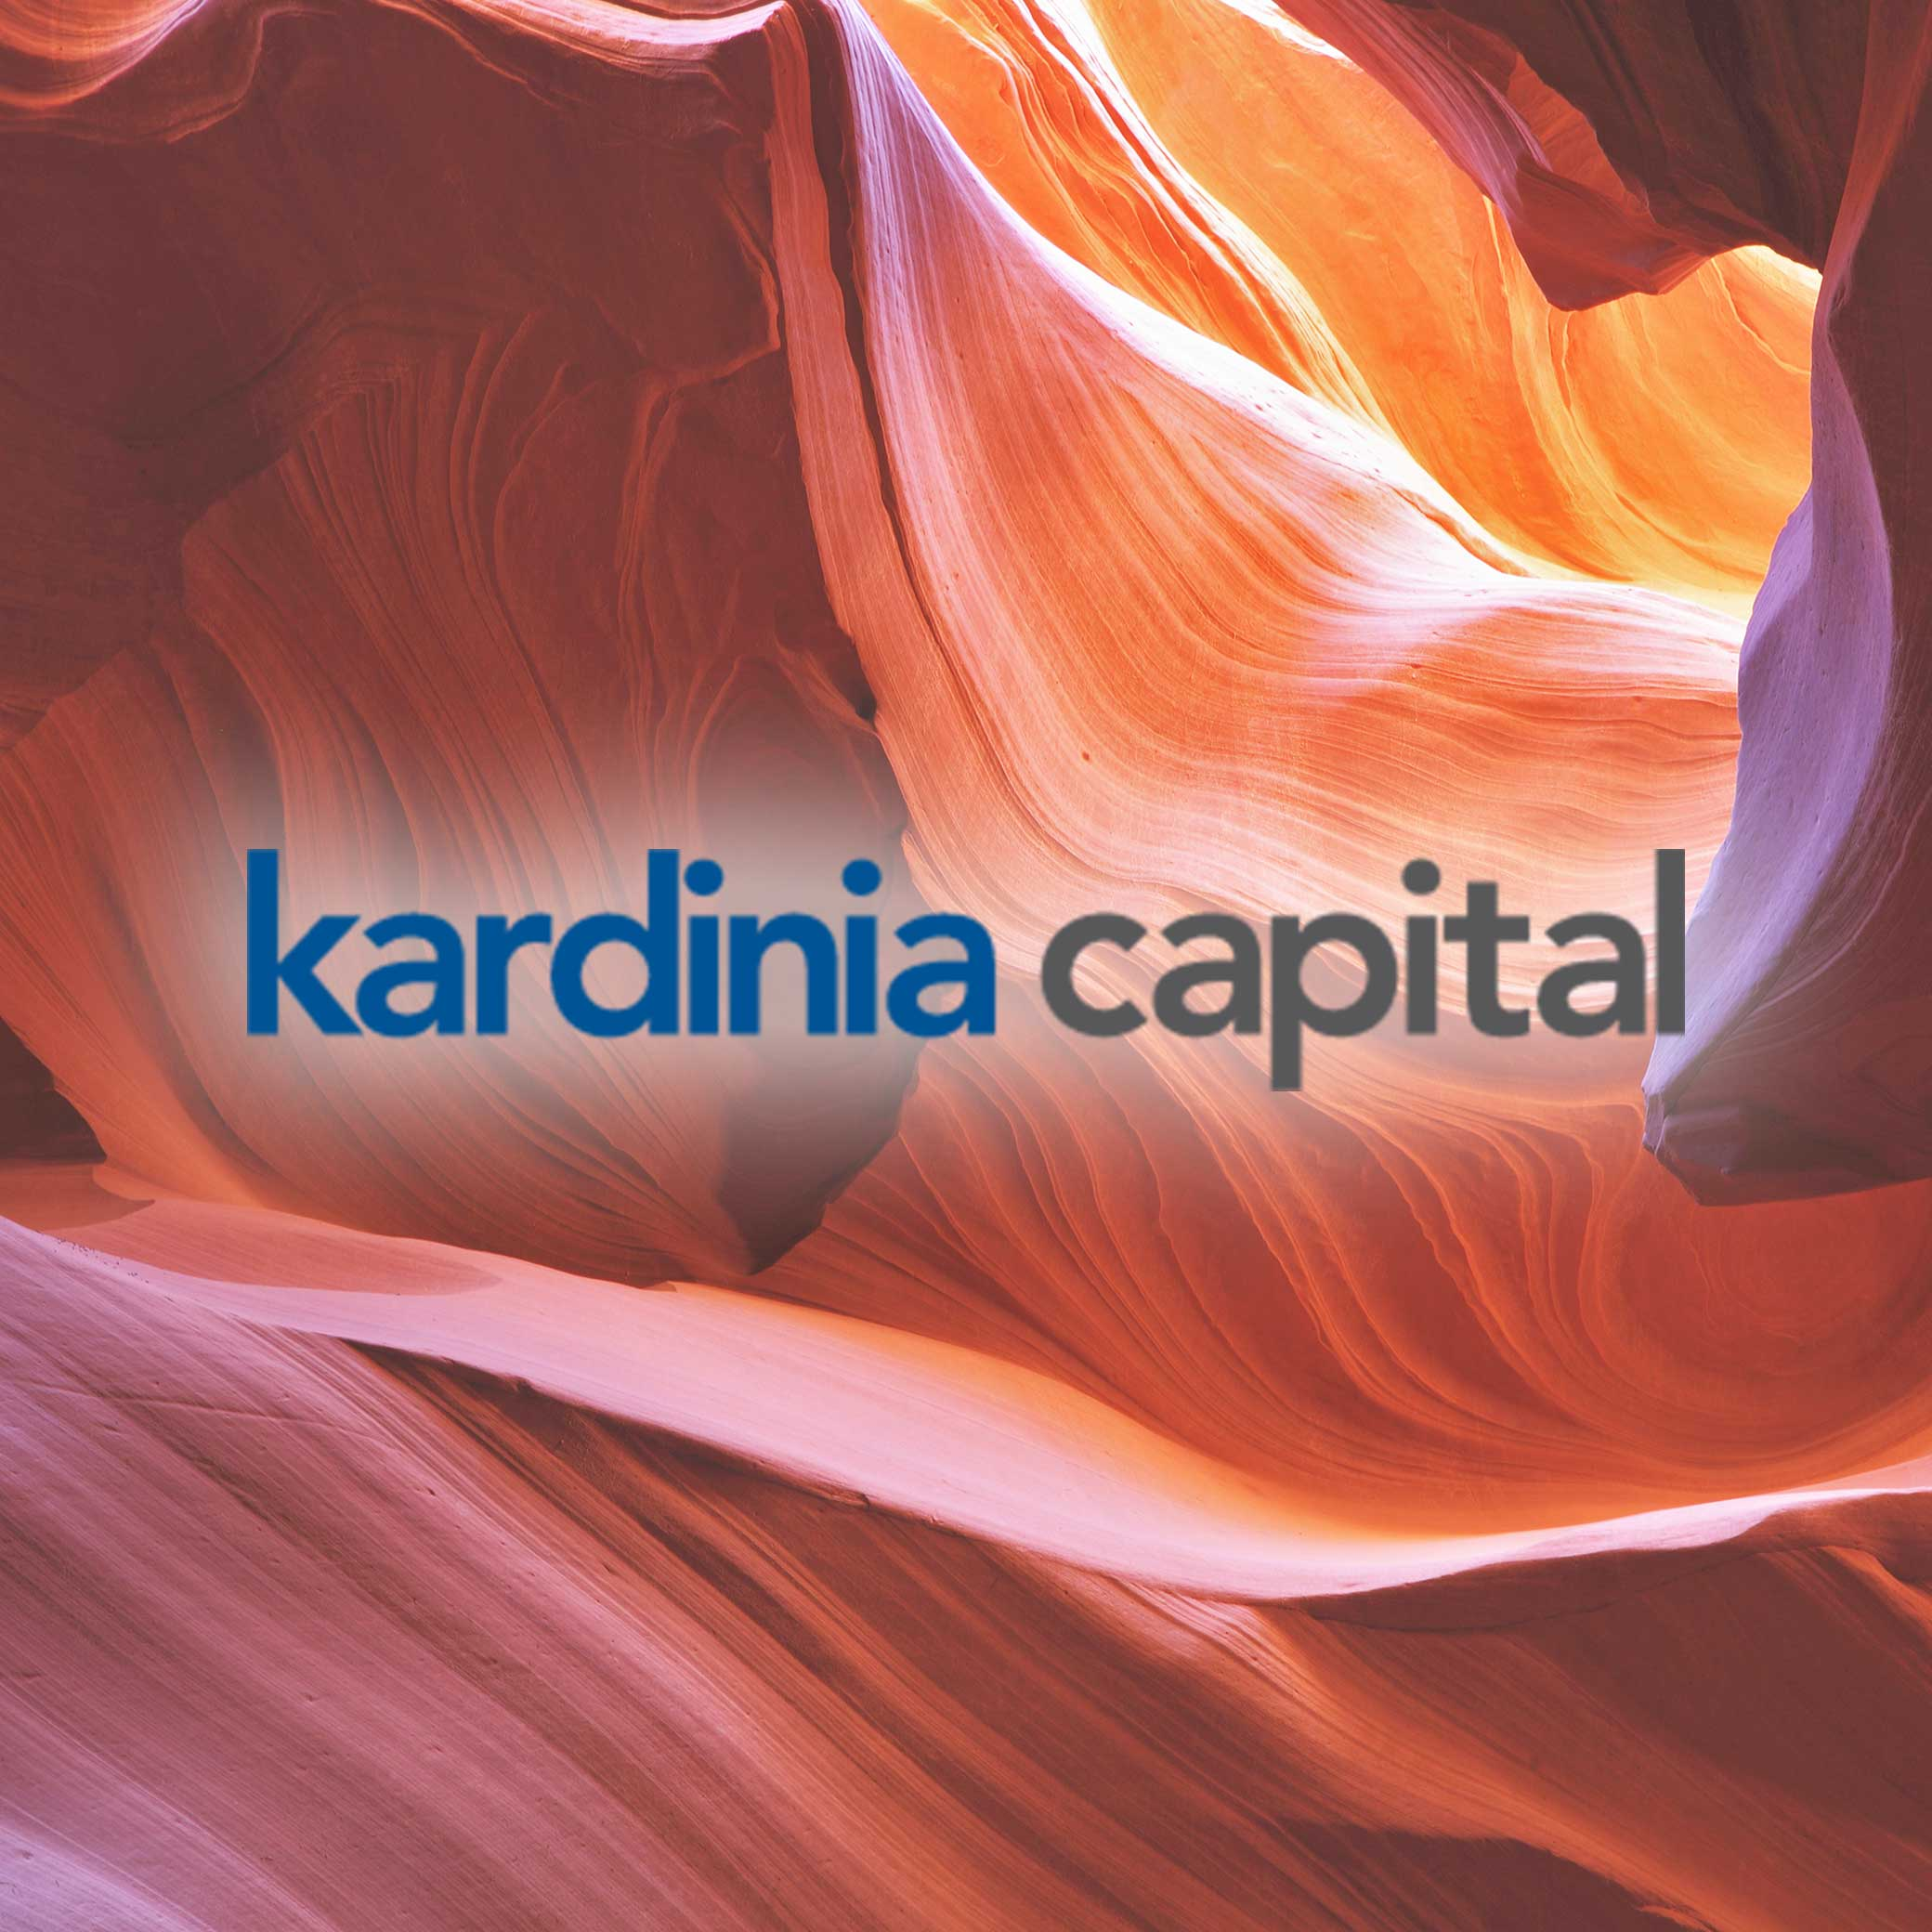 Kardinia portfolio and market update